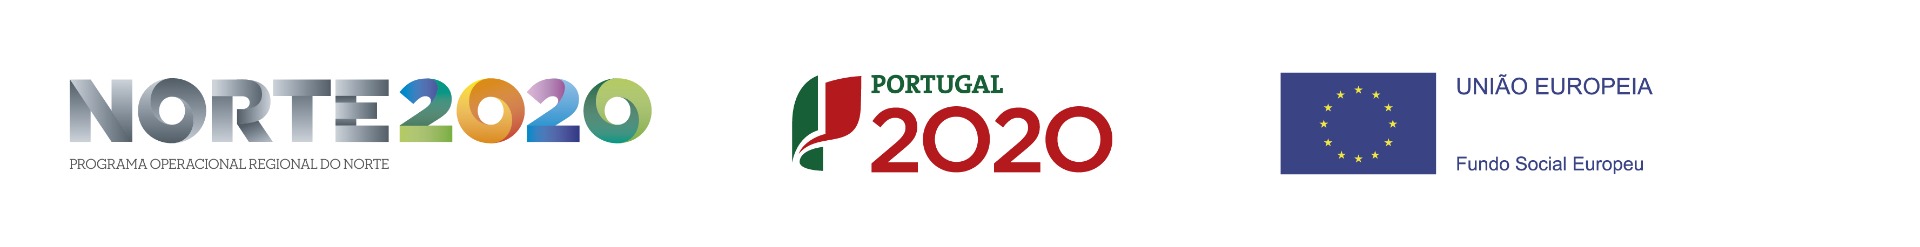 logo portugal 2020.jpeg